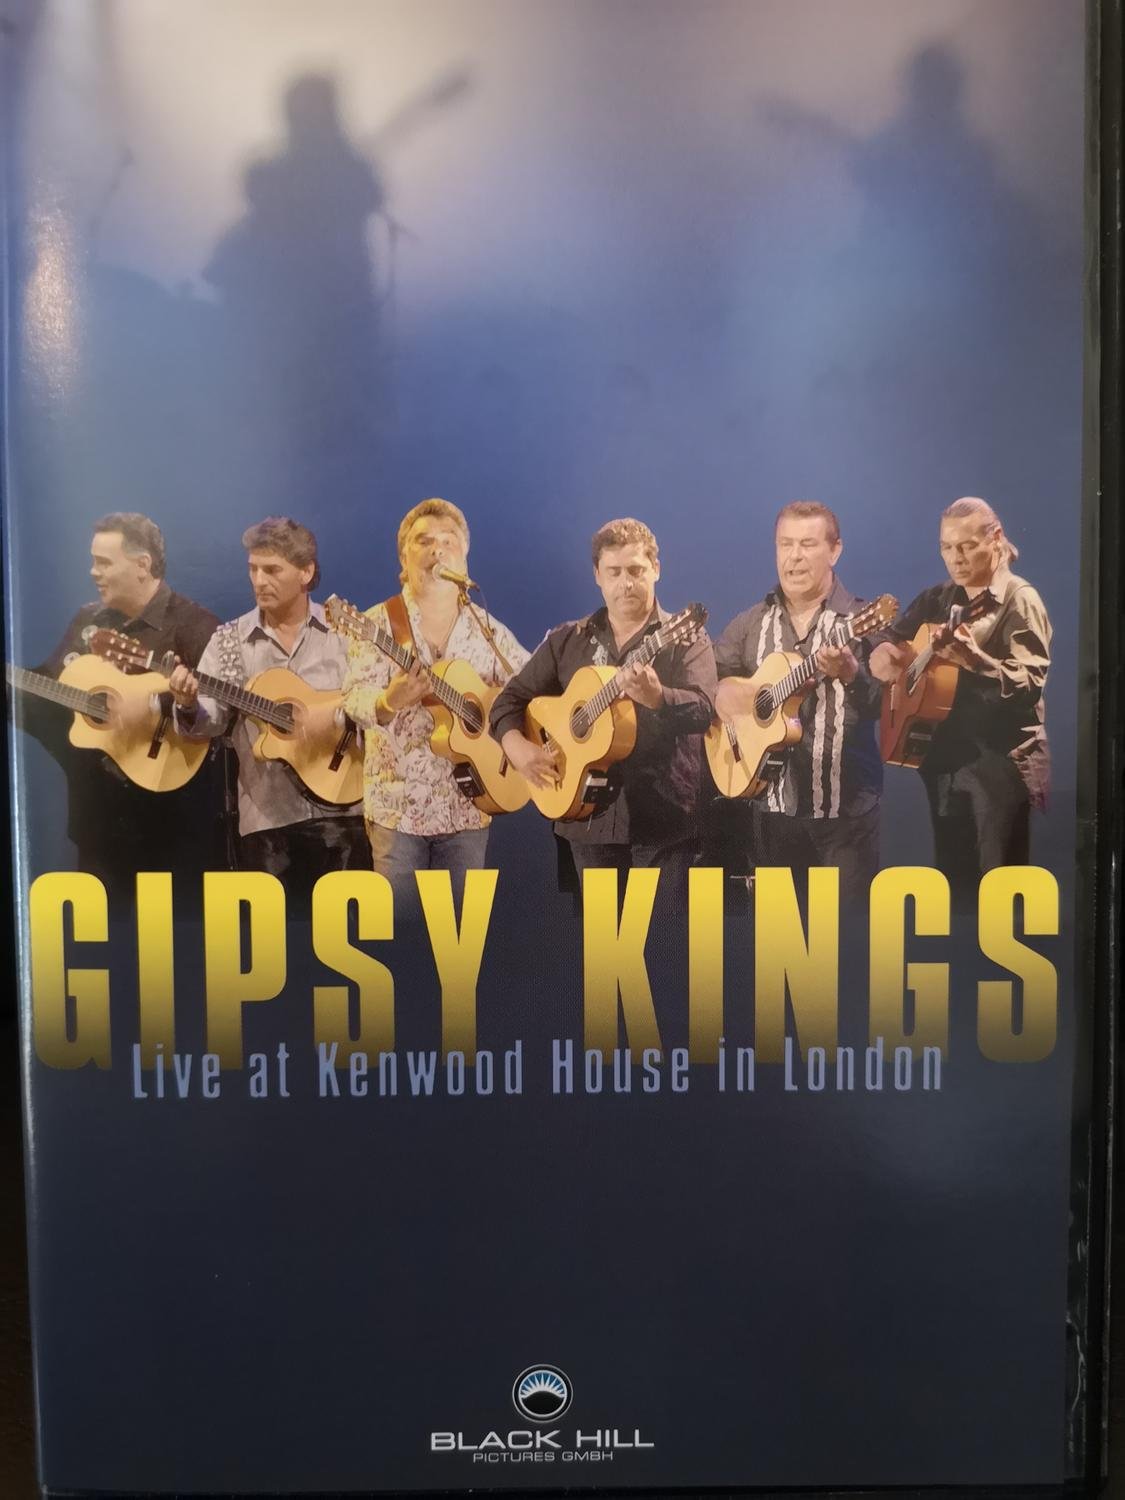 Gipsy Kings - Live At Kenwood House In London | Köp på Tradera (557038478)